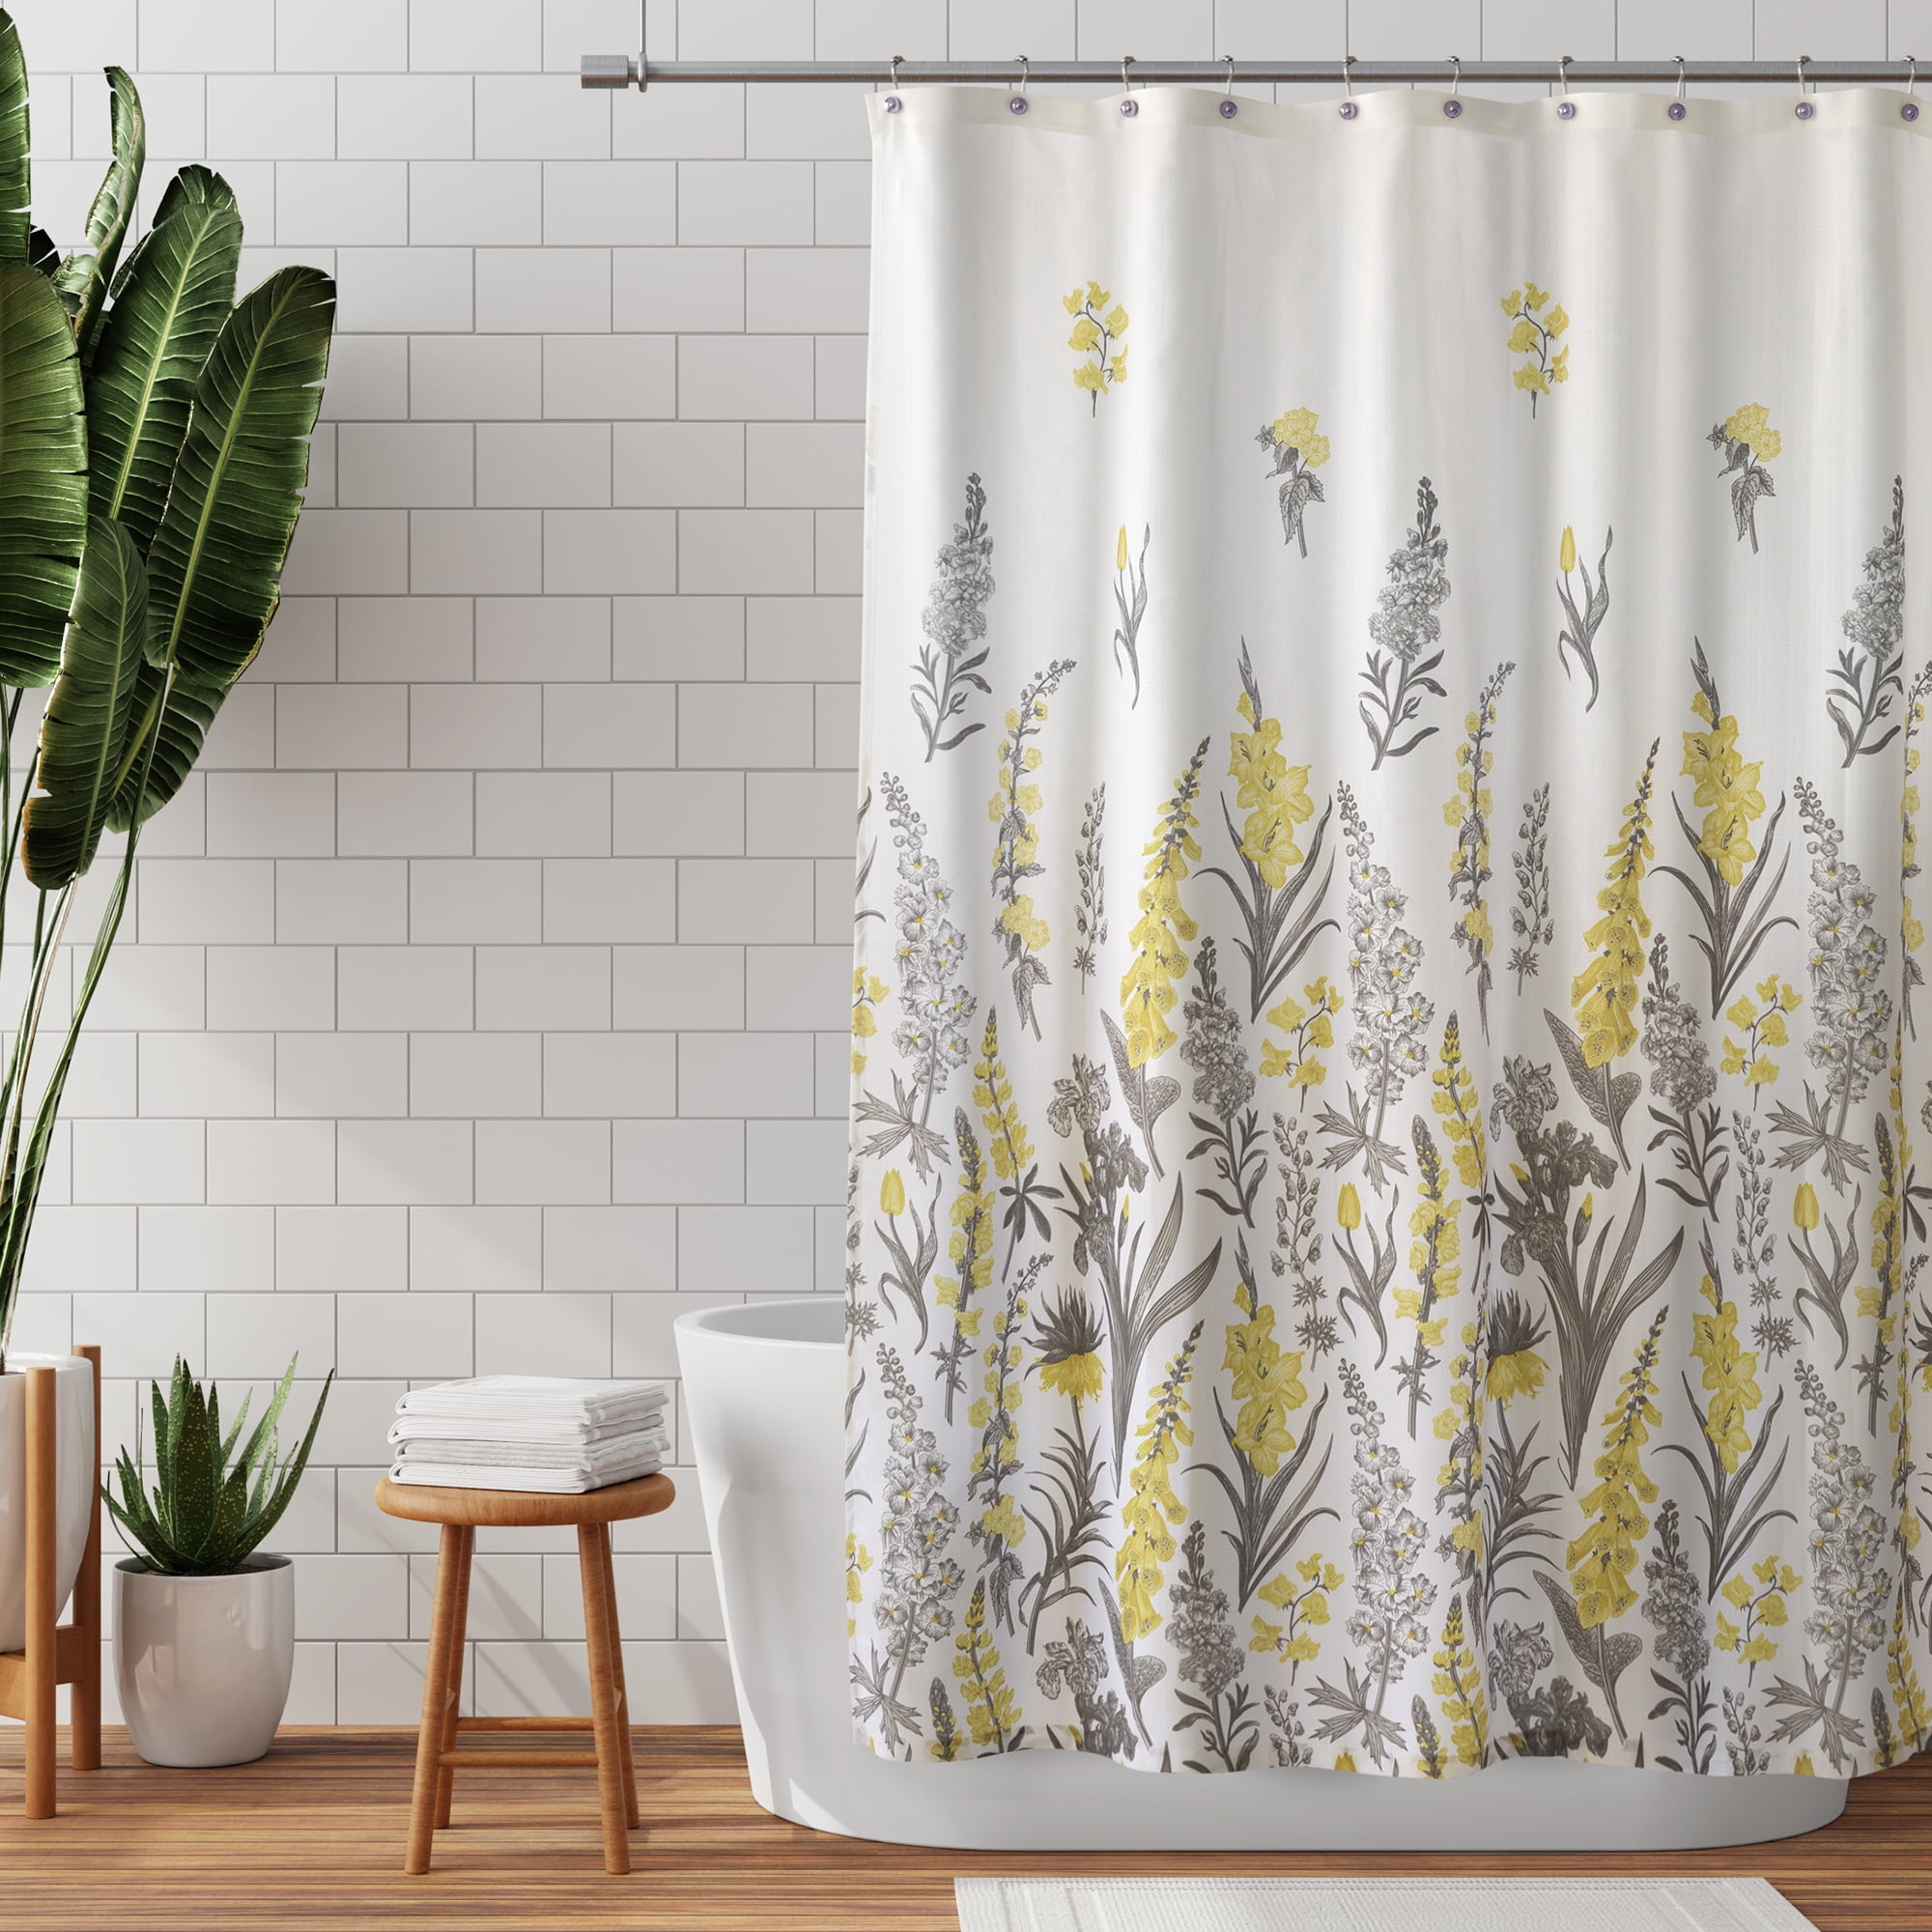 70" x 72" inch Fabric Shower Curtain Floral Damask Geometric Design 